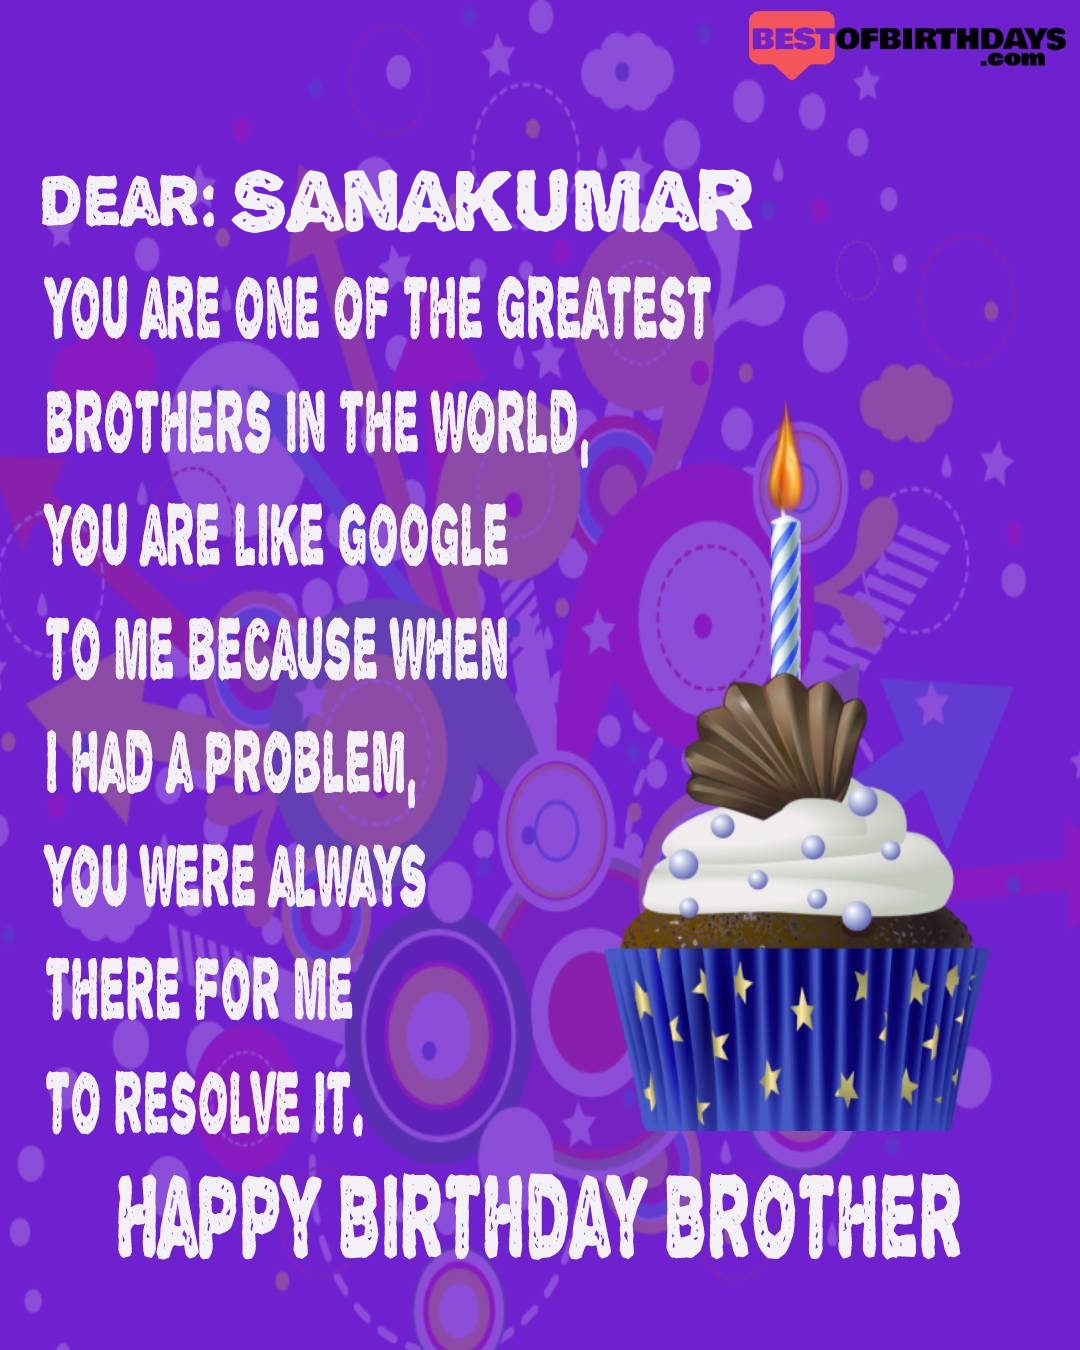 Happy birthday sanakumar bhai brother bro